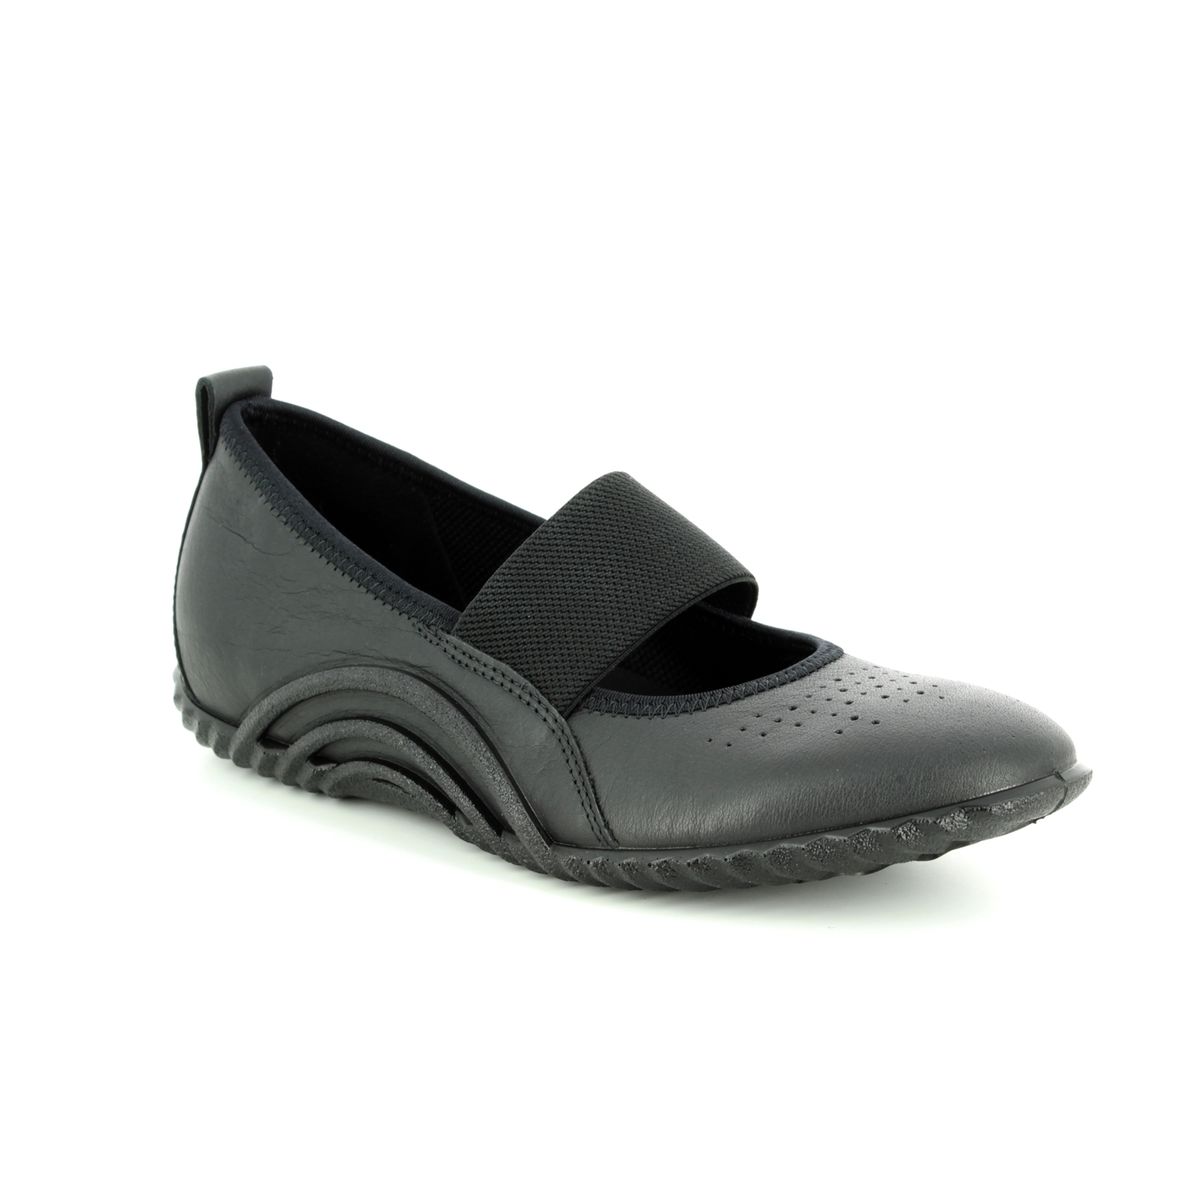 Black leather Mary Jane Shoes